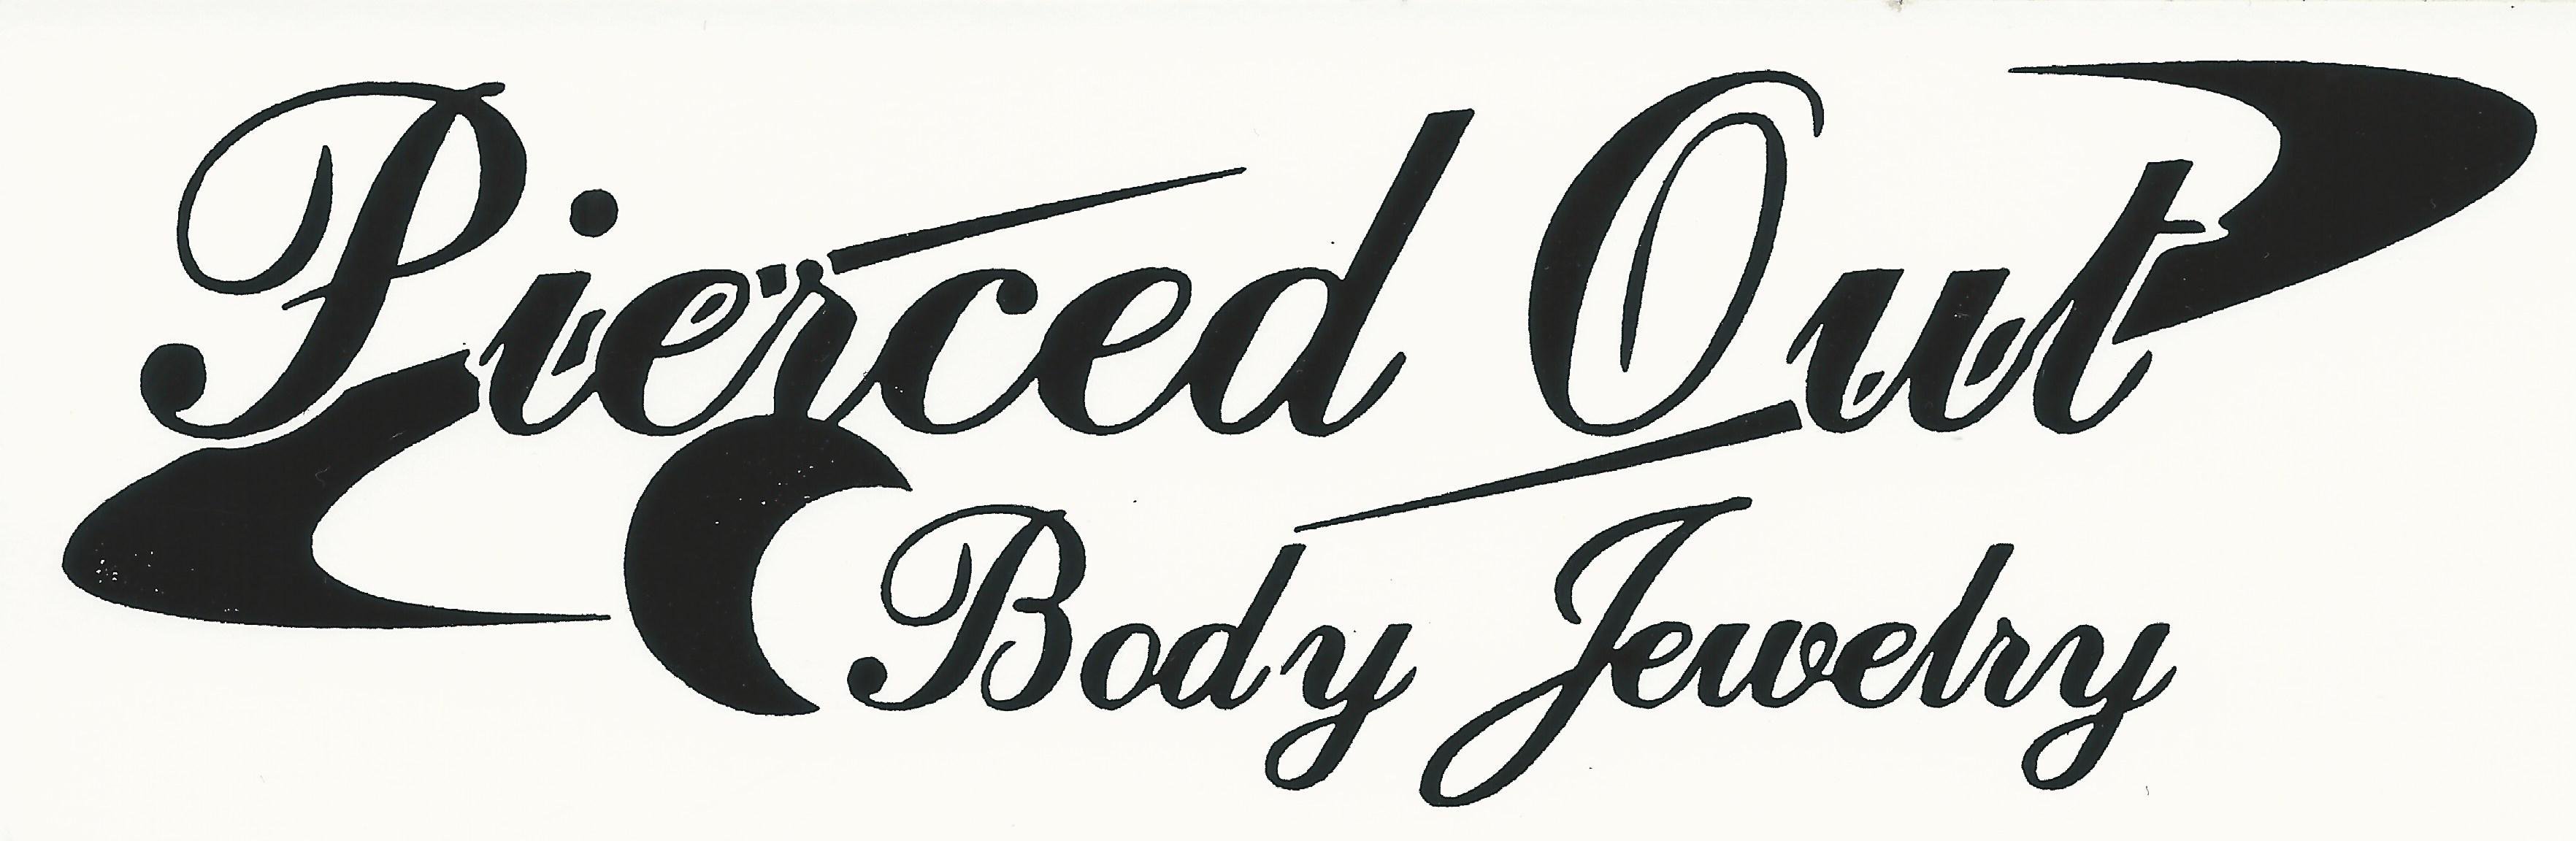 Pierced Out Body Jewelry & Piercing